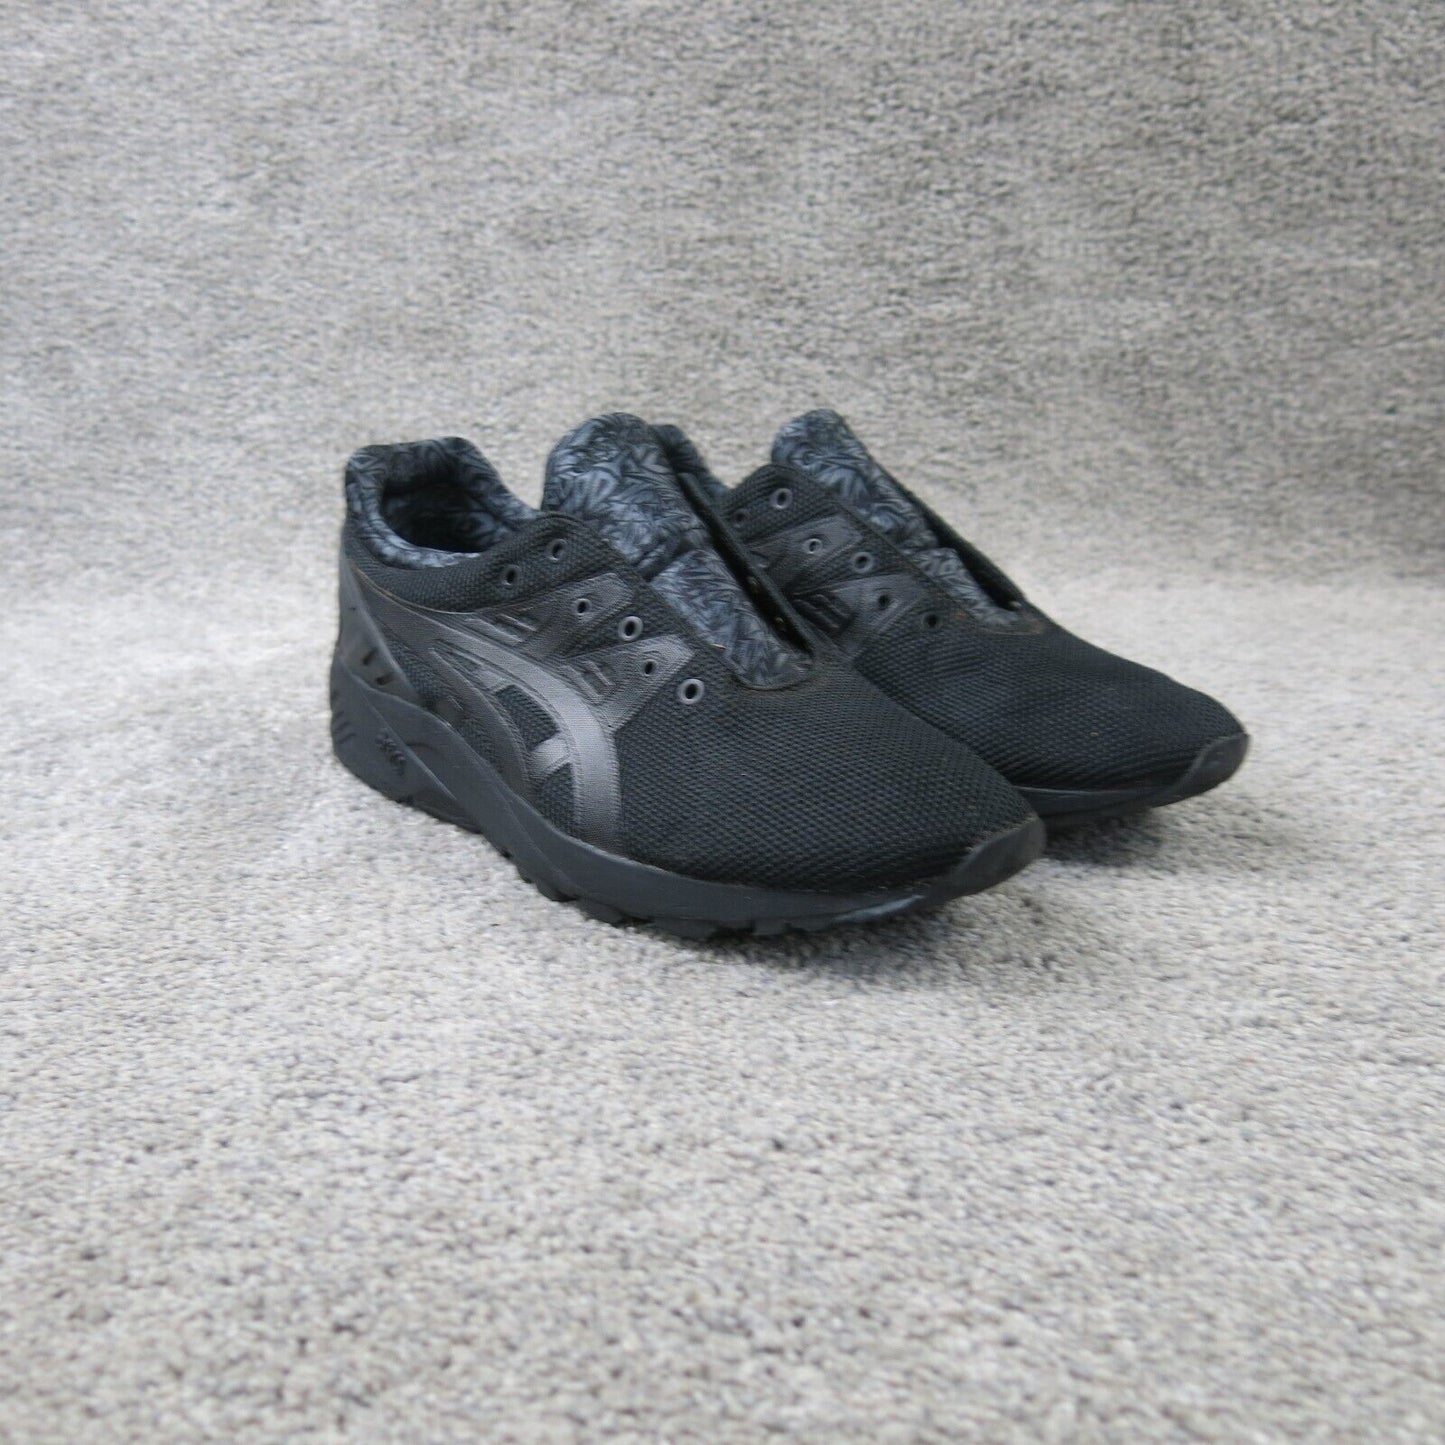 Asics Men's Gel-Kayano H51ZDQ Black Trainer Athletic Sneaker Shoes Size US 10.5